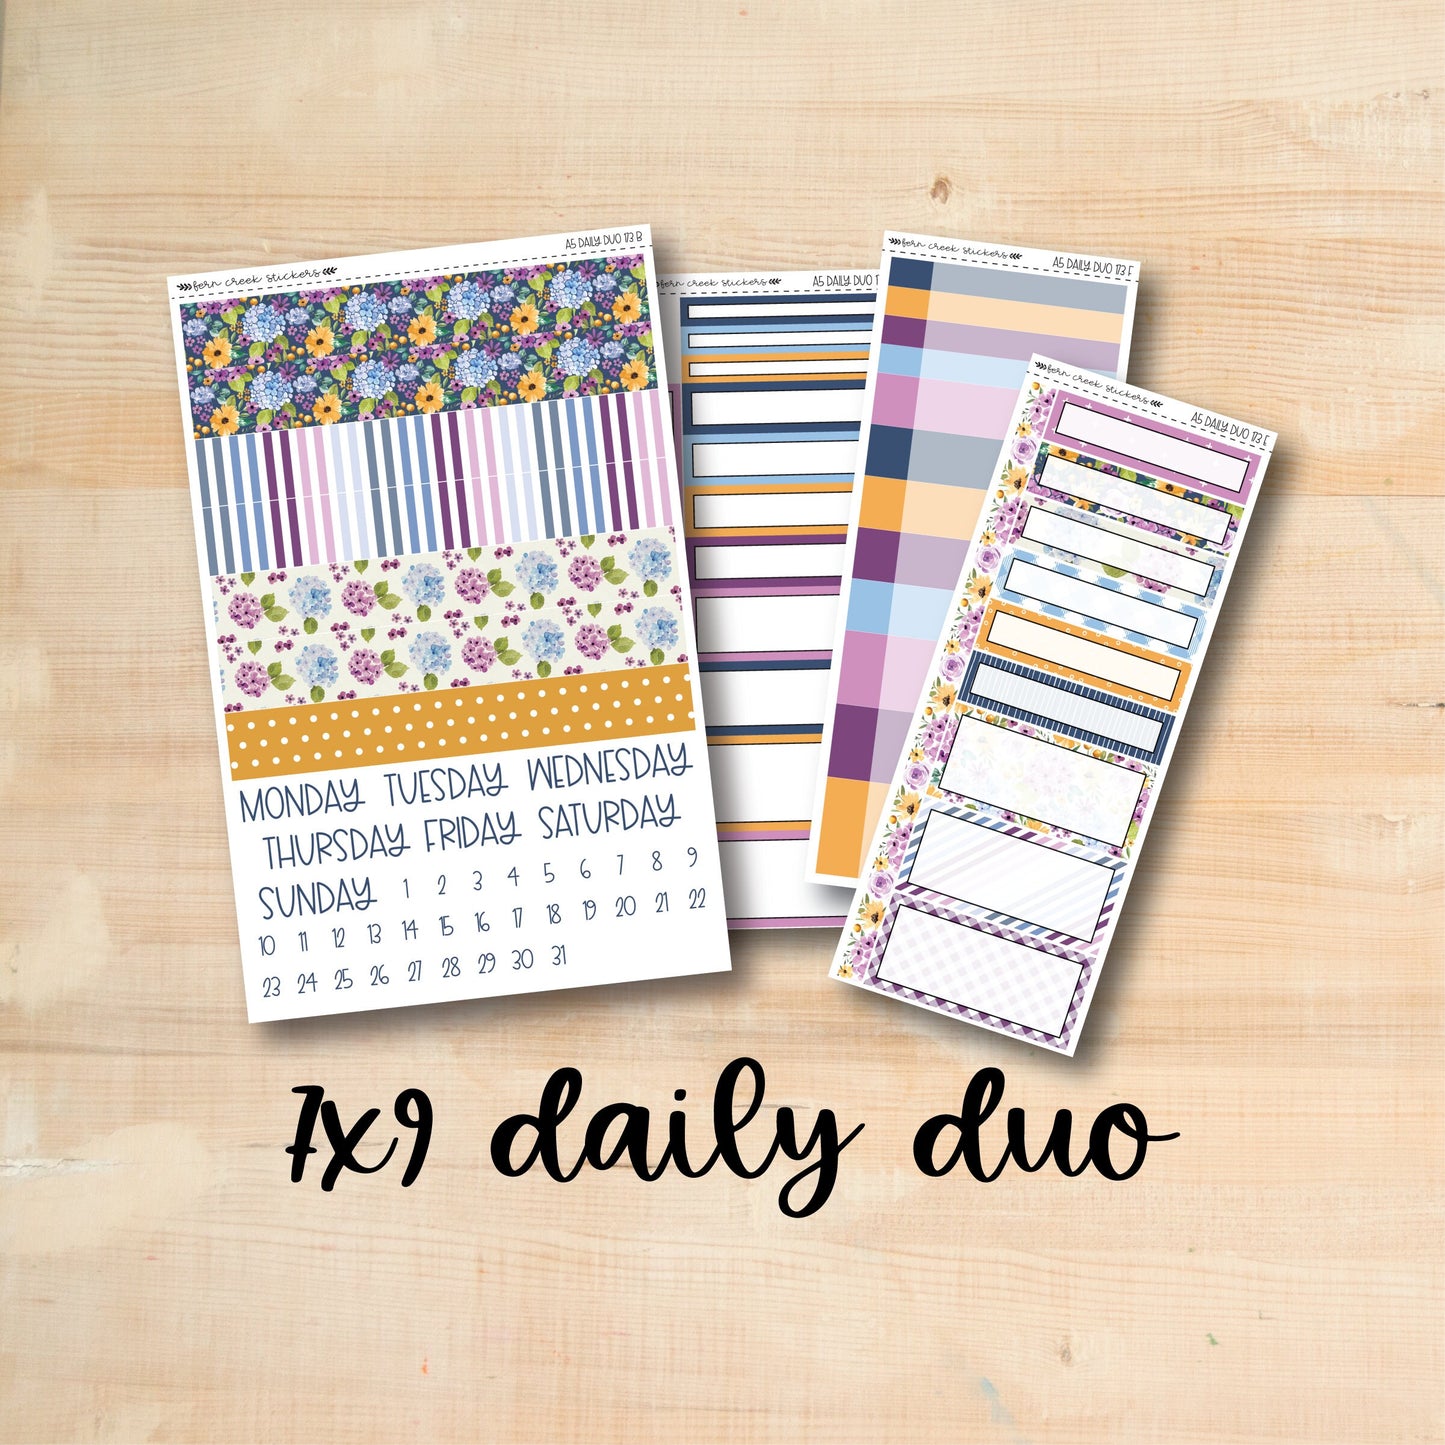 7x9 Daily Duo 173 || HYDRANGEAS 7x9 Daily Duo Kit